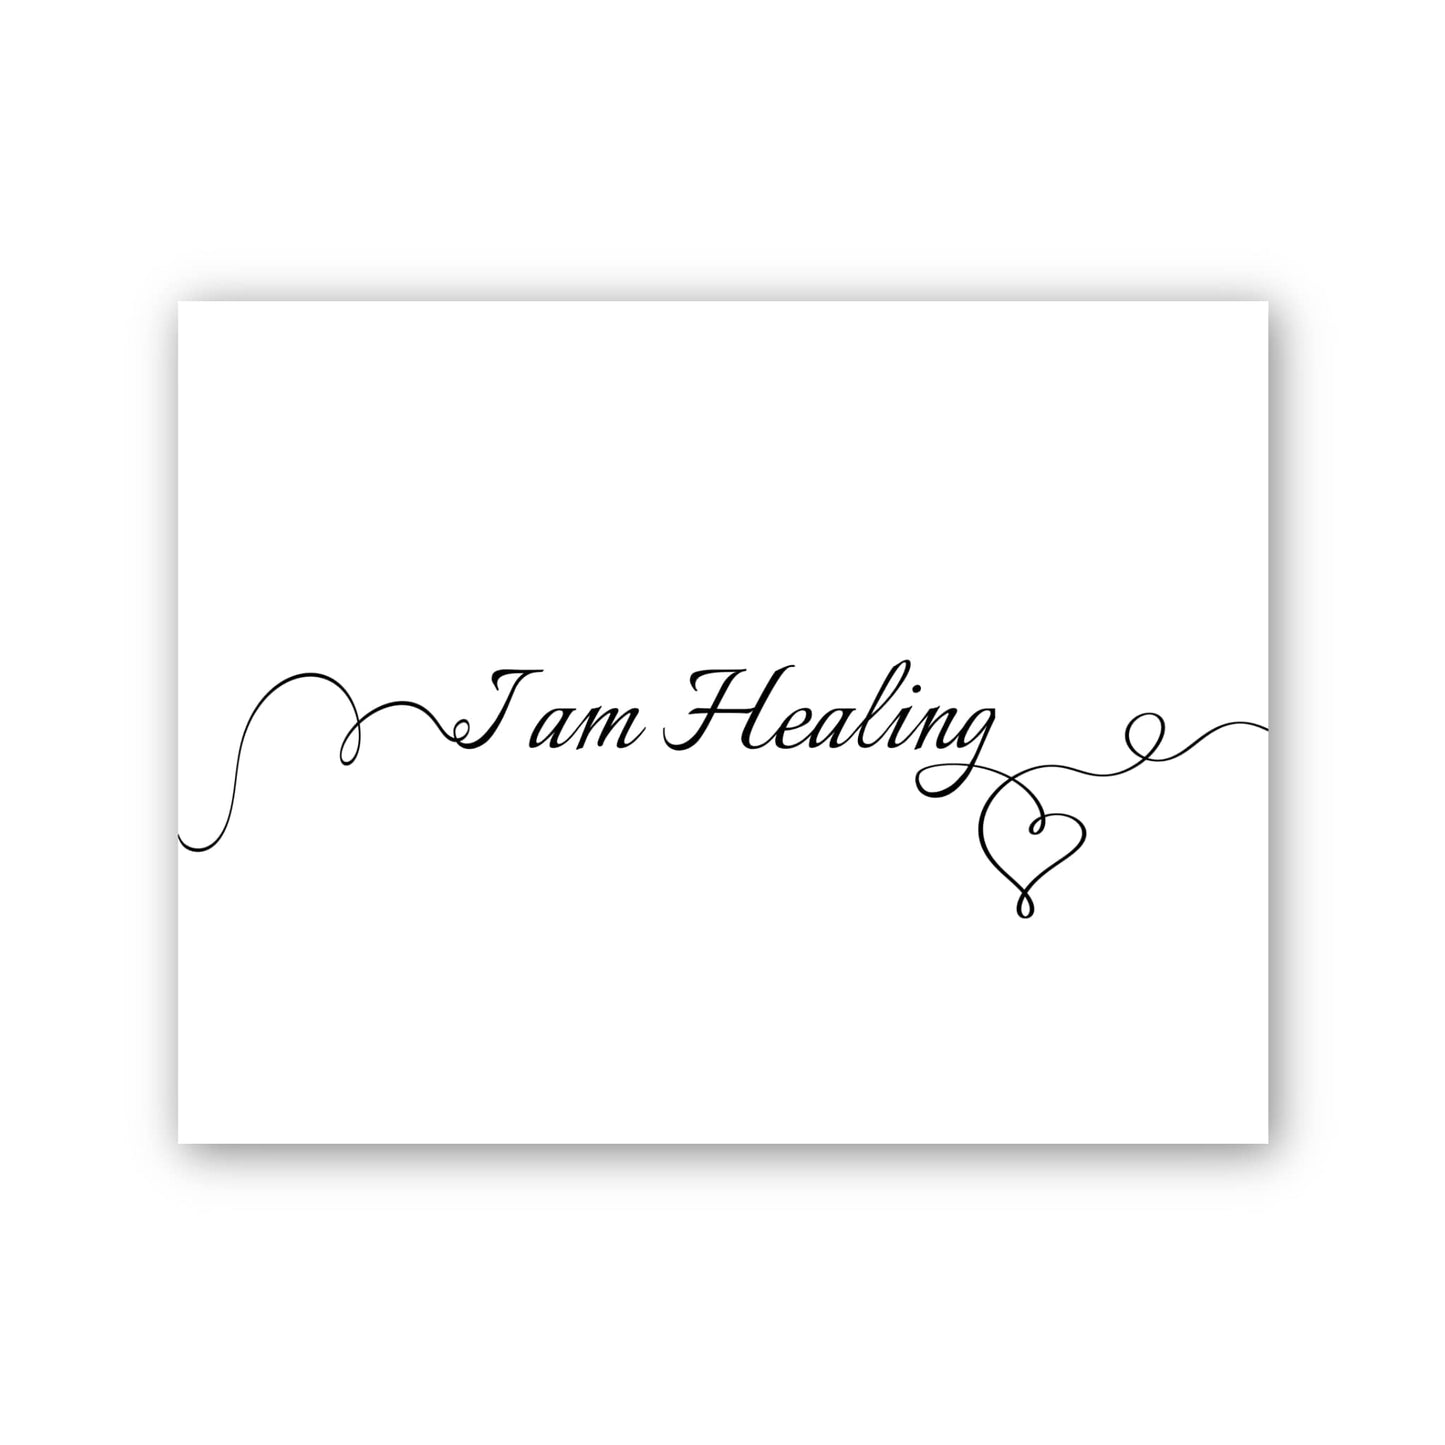 I am Healing